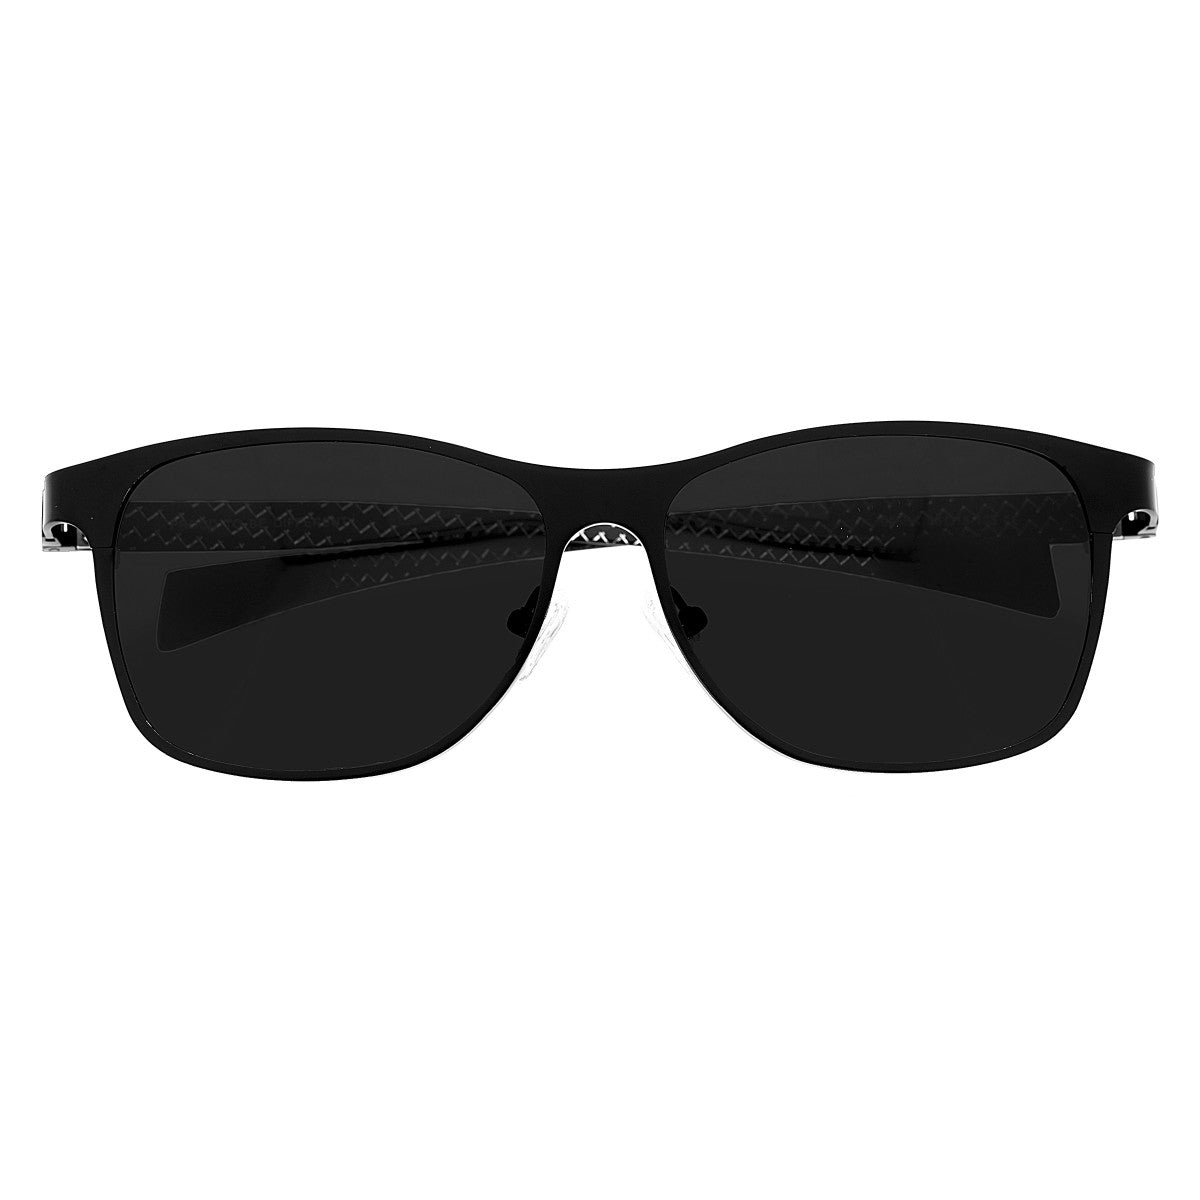 Breed Templar Titanium Polarized Sunglasses - Black/Black - BSG035BK